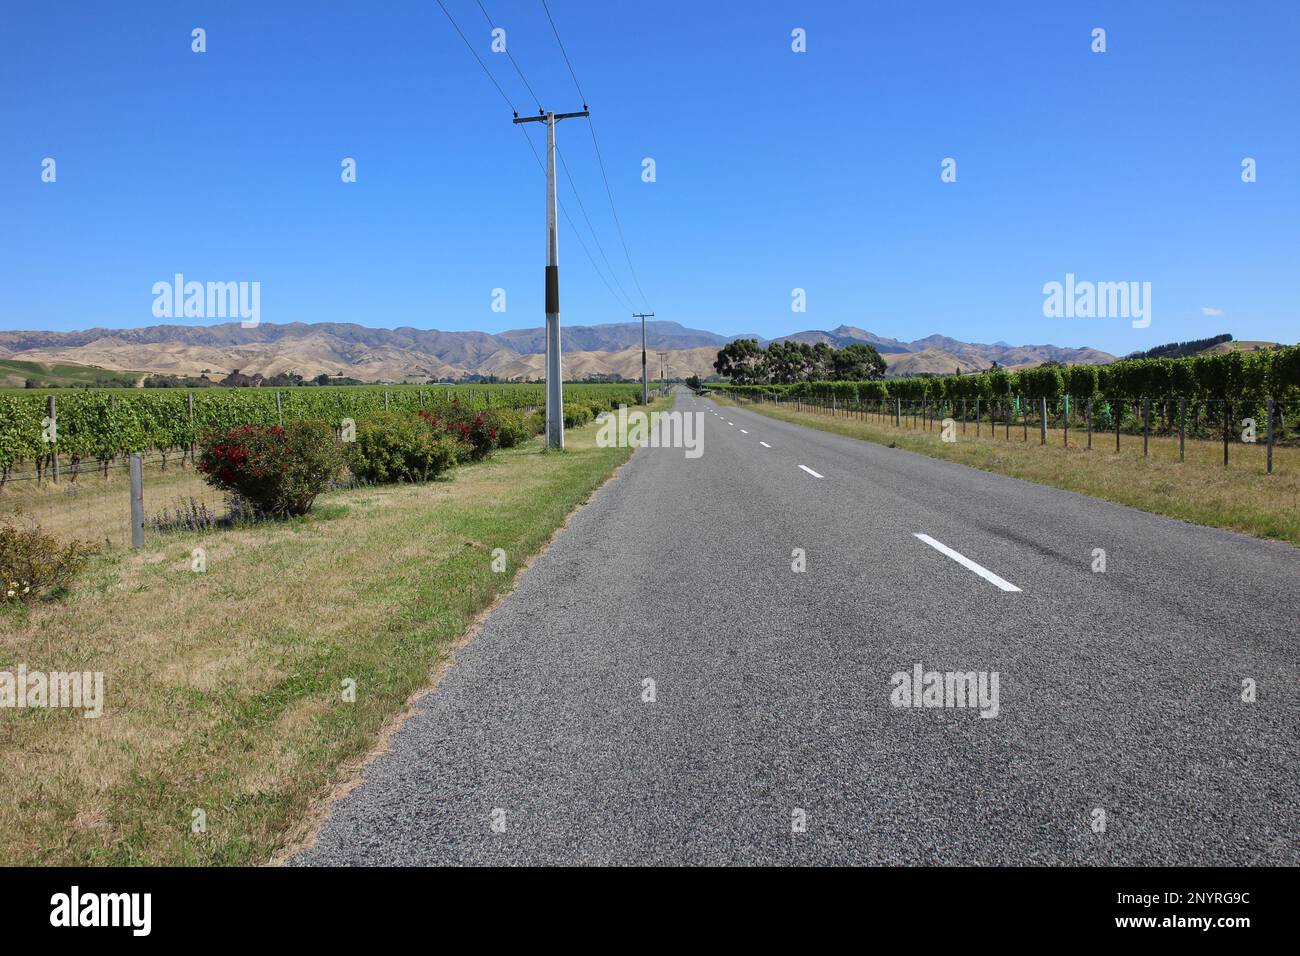 Wine field in Blenheim, New Zealand Stock Photo